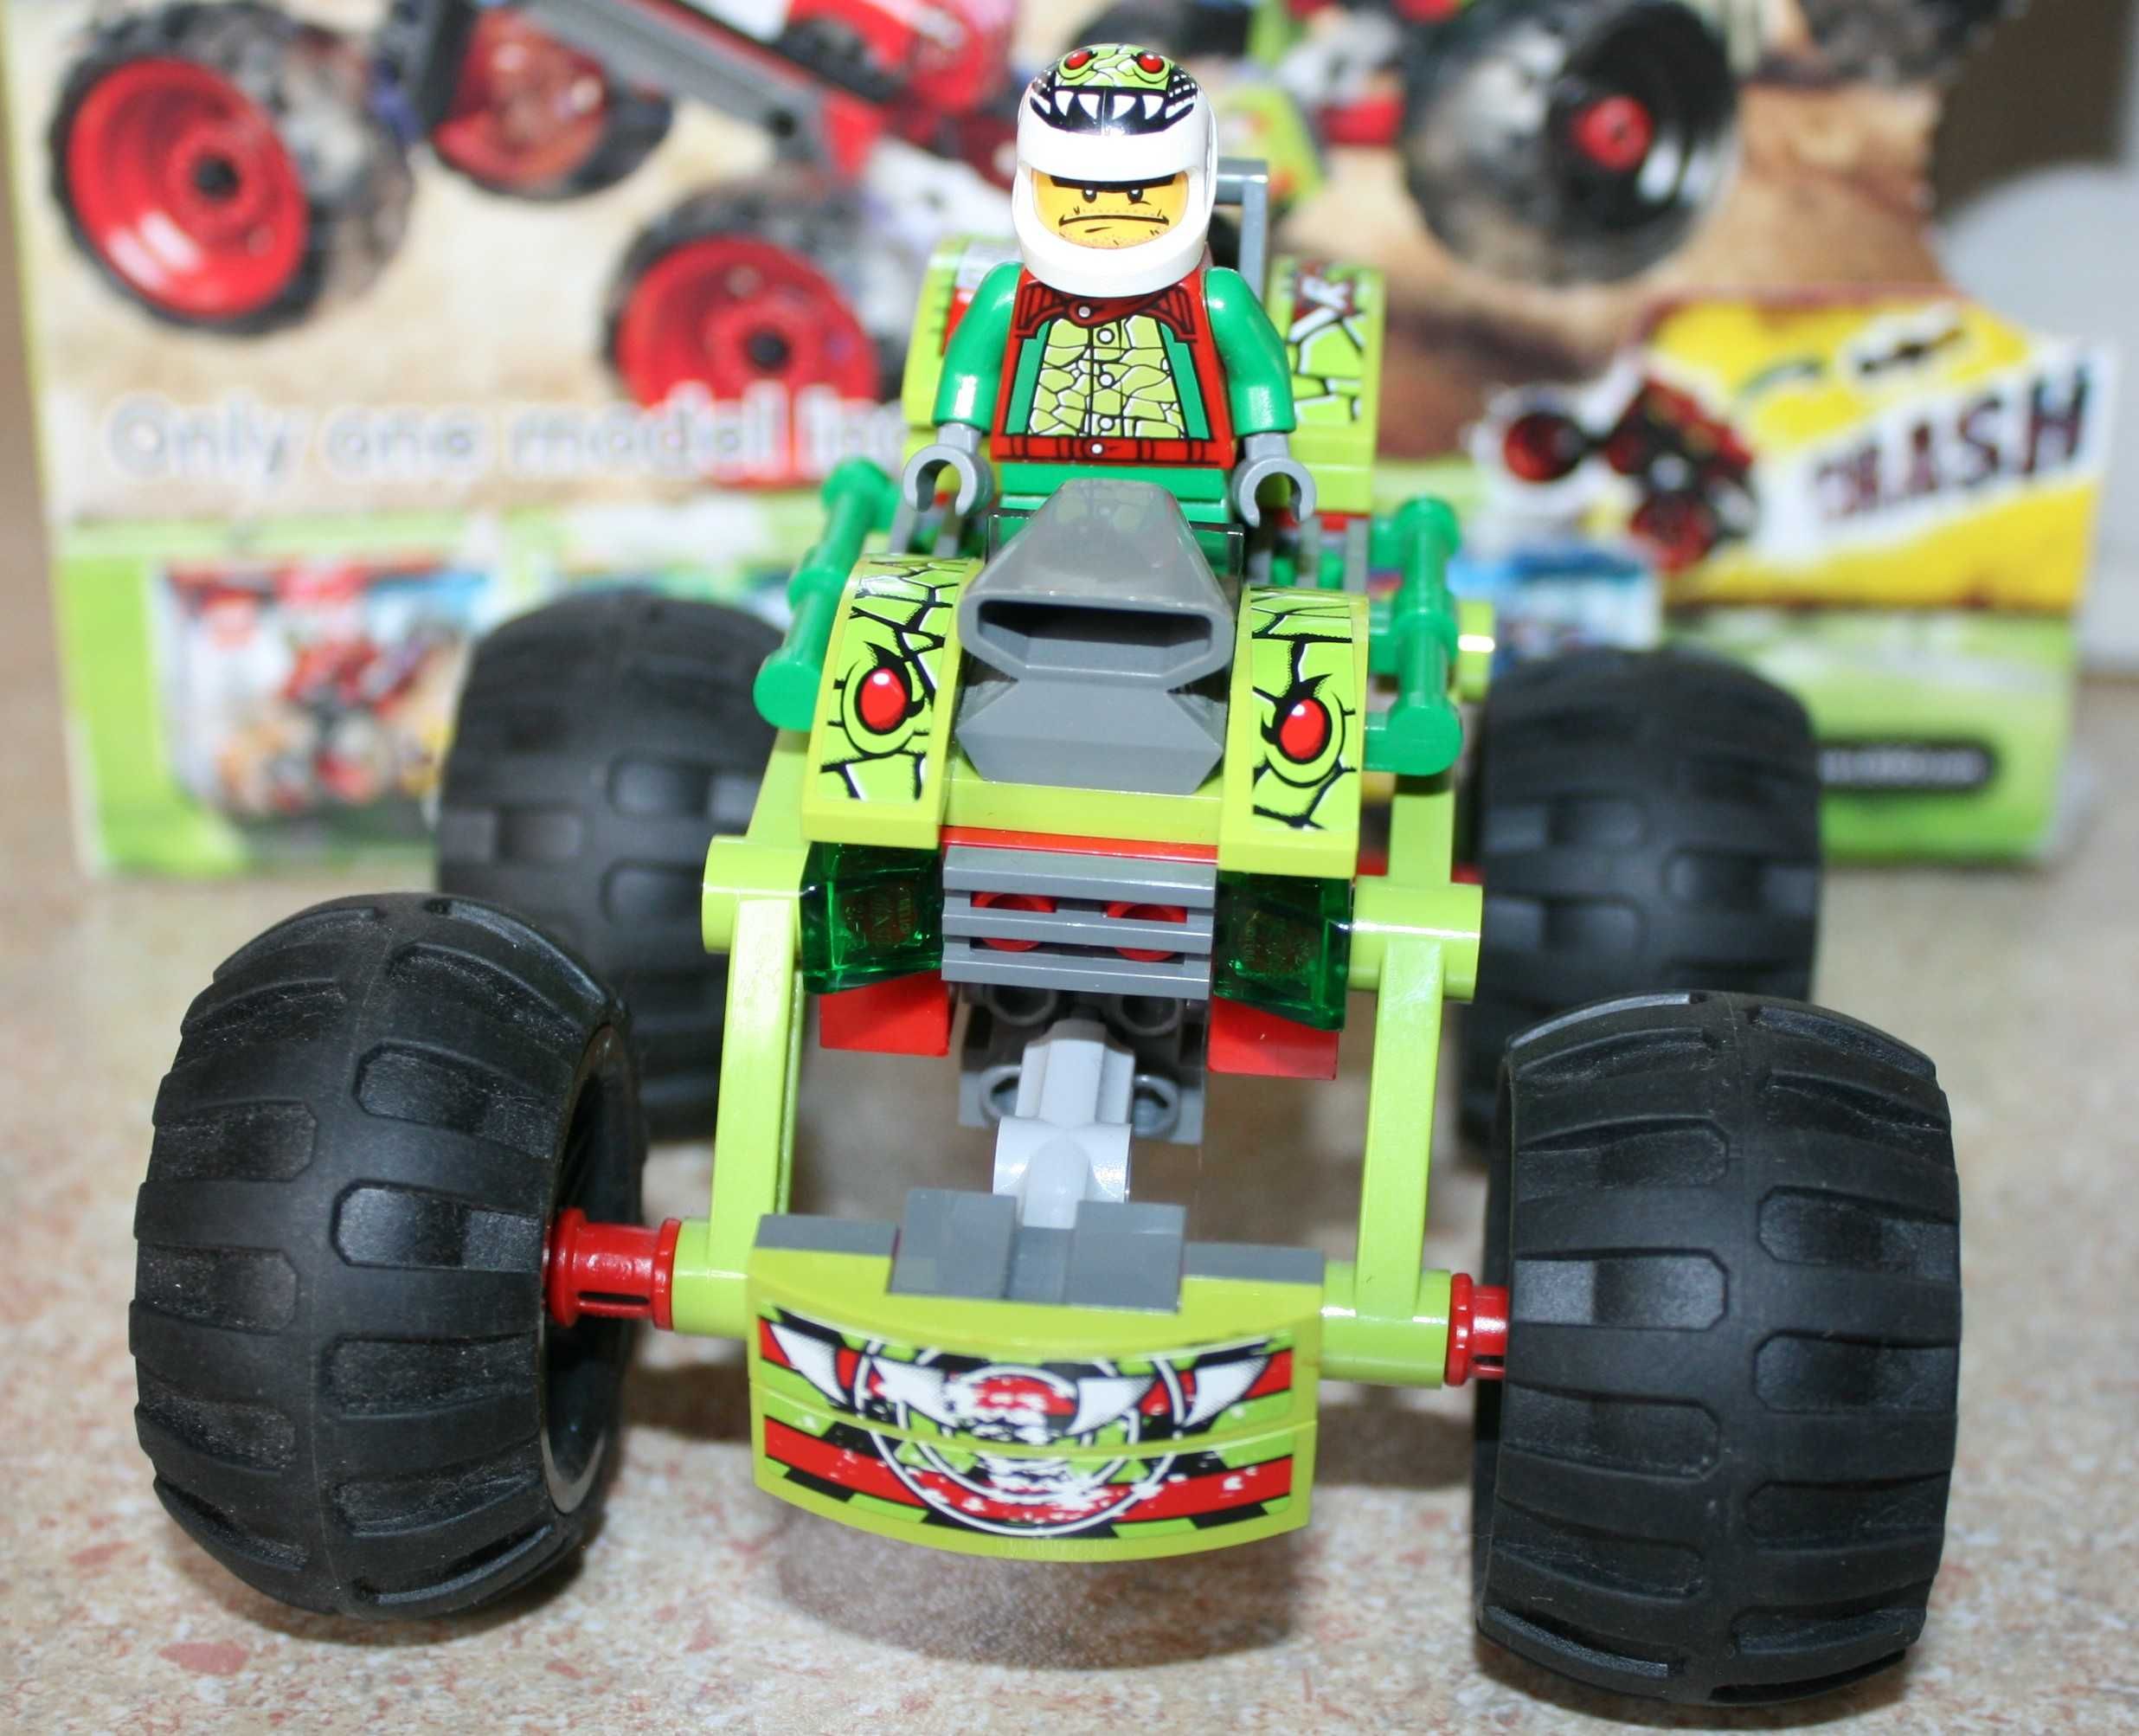 LEGO Racers 9095 Nitro Predator